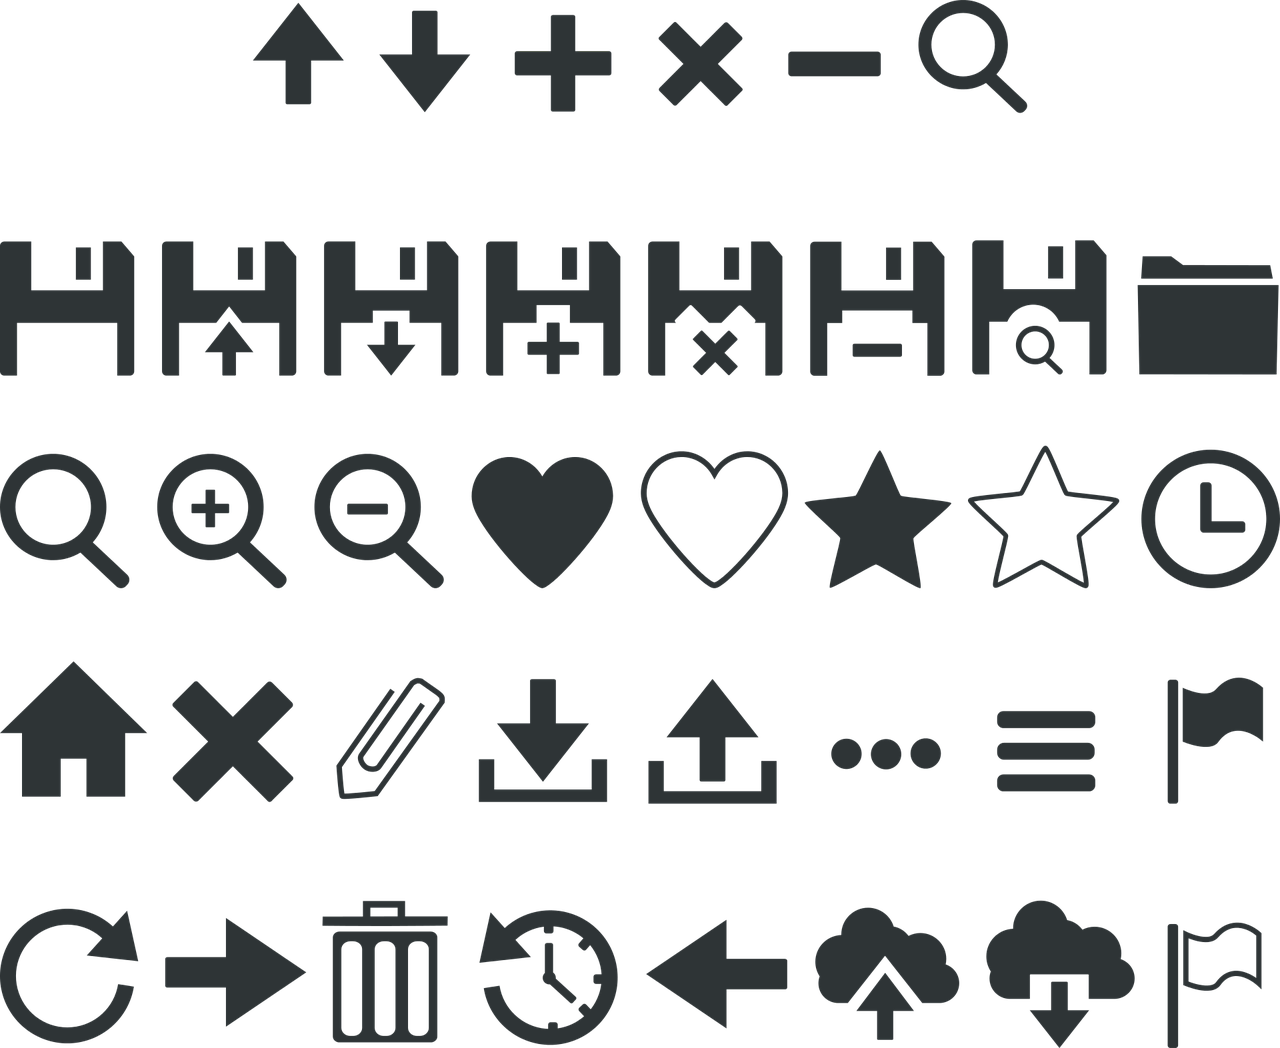 a number of different symbols on a black background, a screenshot, minimal modern pixel sorting, 1285445247], metal font, ello